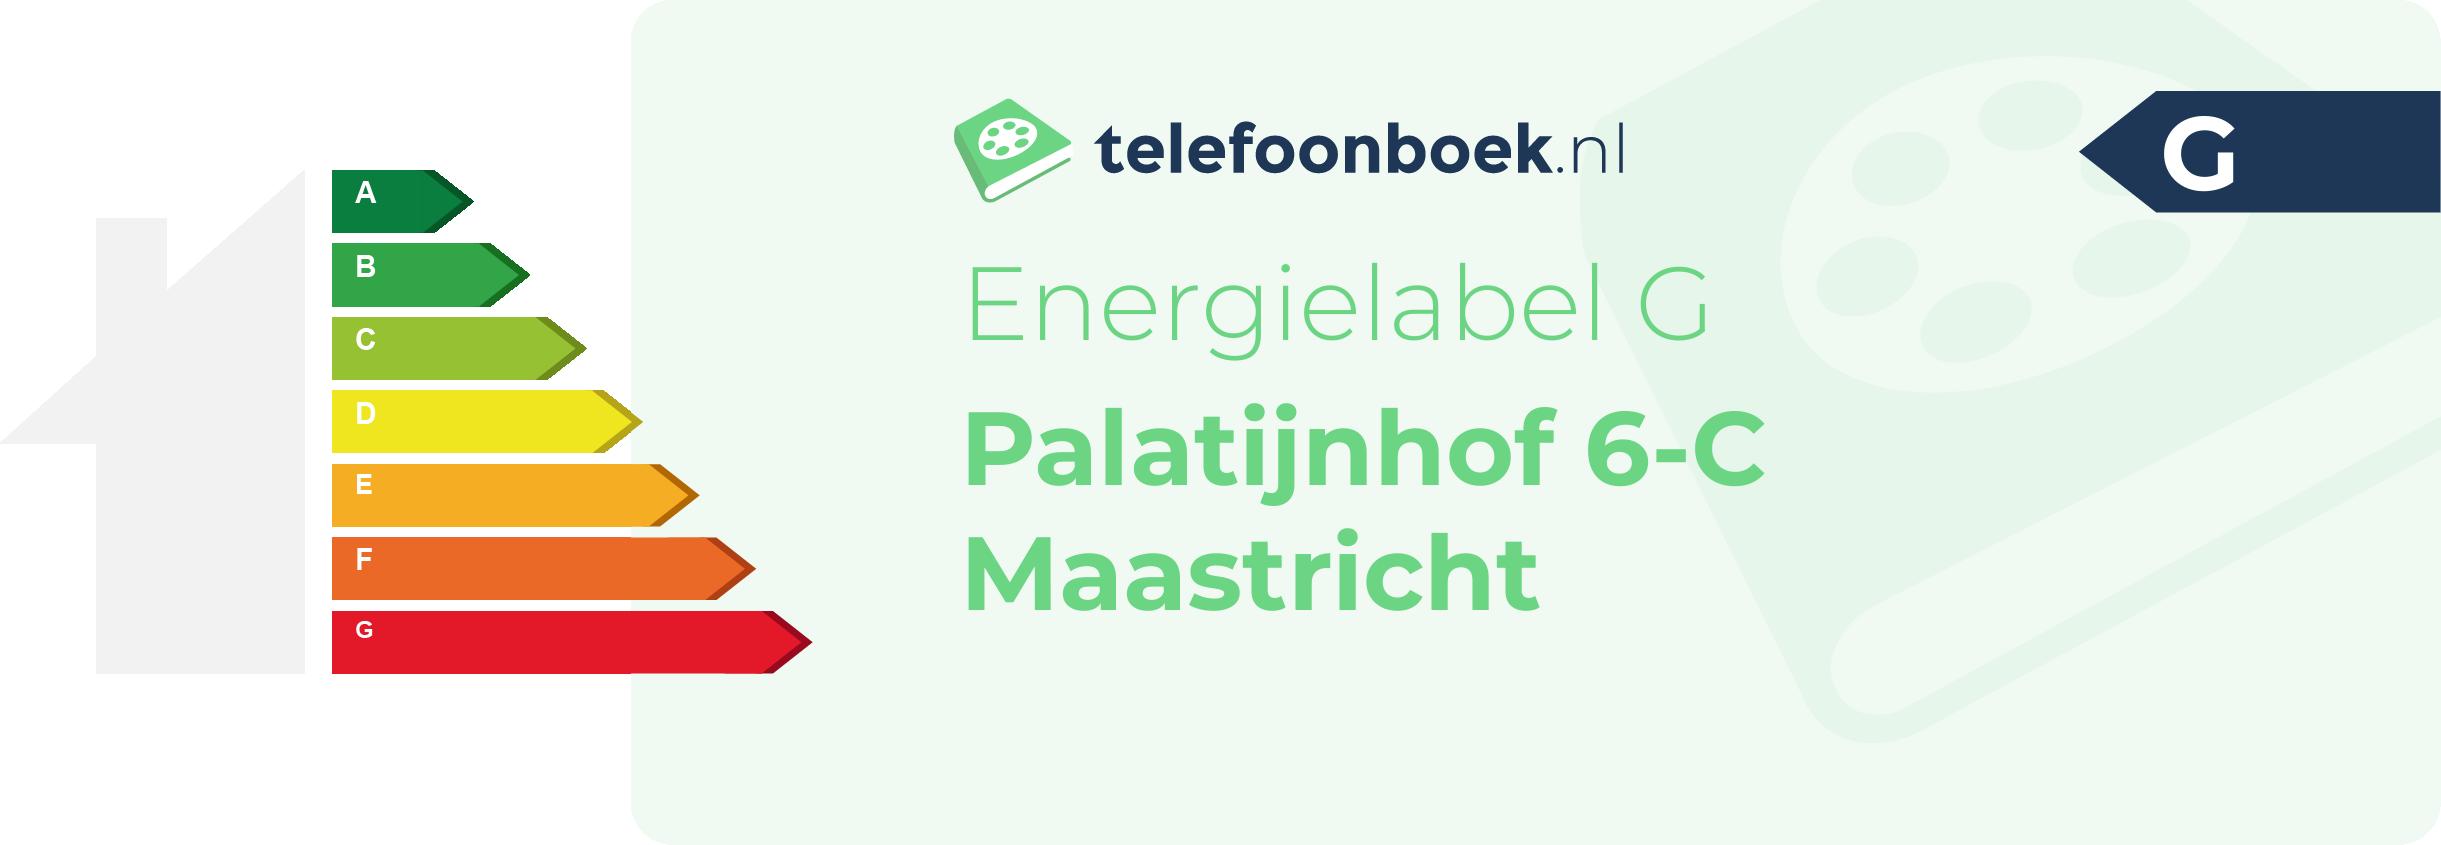 Energielabel Palatijnhof 6-C Maastricht